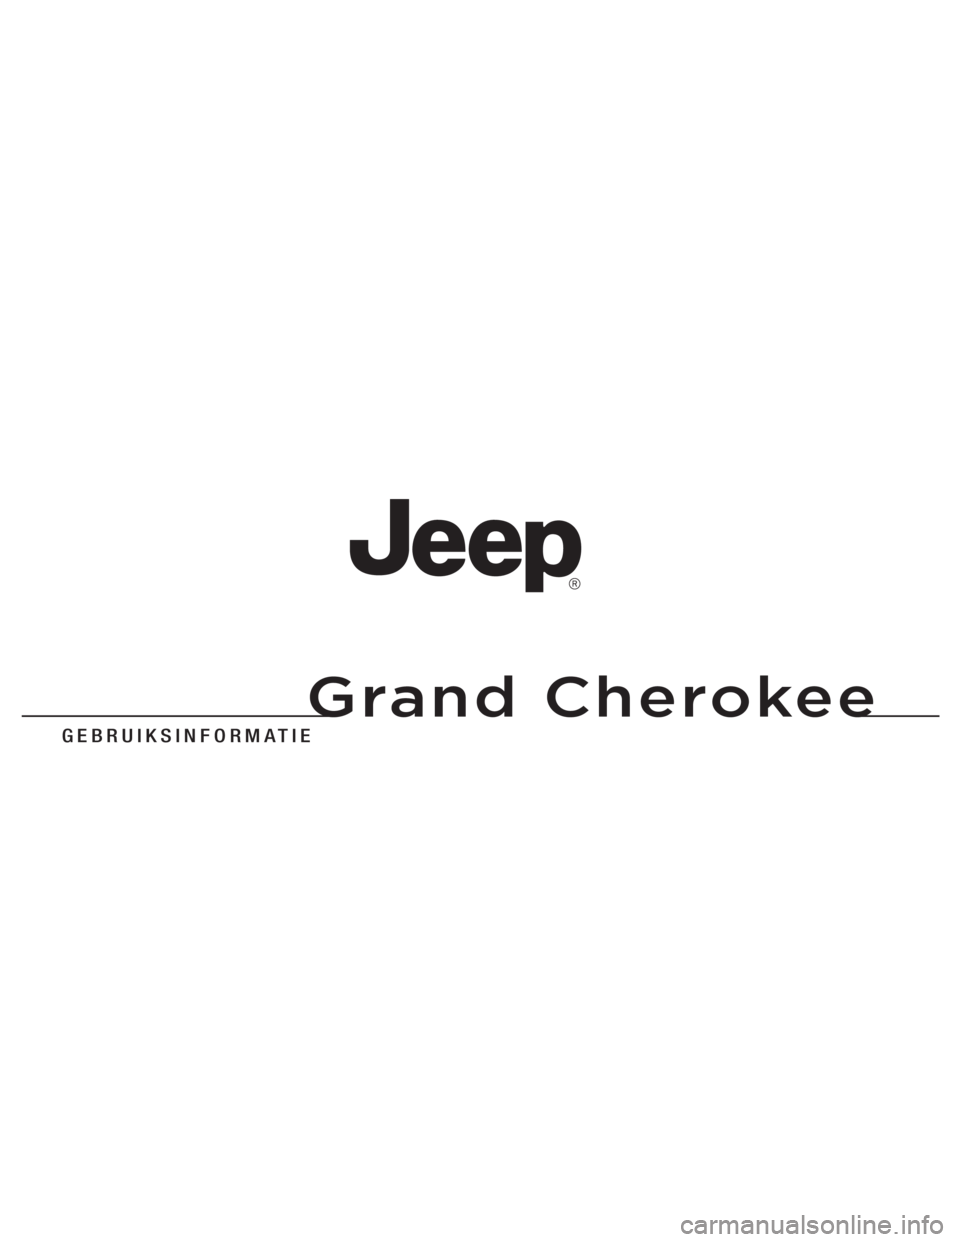 JEEP GRAND CHEROKEE 2012  Instructieboek (in Dutch) 
Grand Cherokee
G E B R U I K S I N \f O R M A \b I E
G r a n d   C h e r o k e e
11WK741-126-DUT-AA
                  \k        Gedruk\f in E\kur\bpa 11 